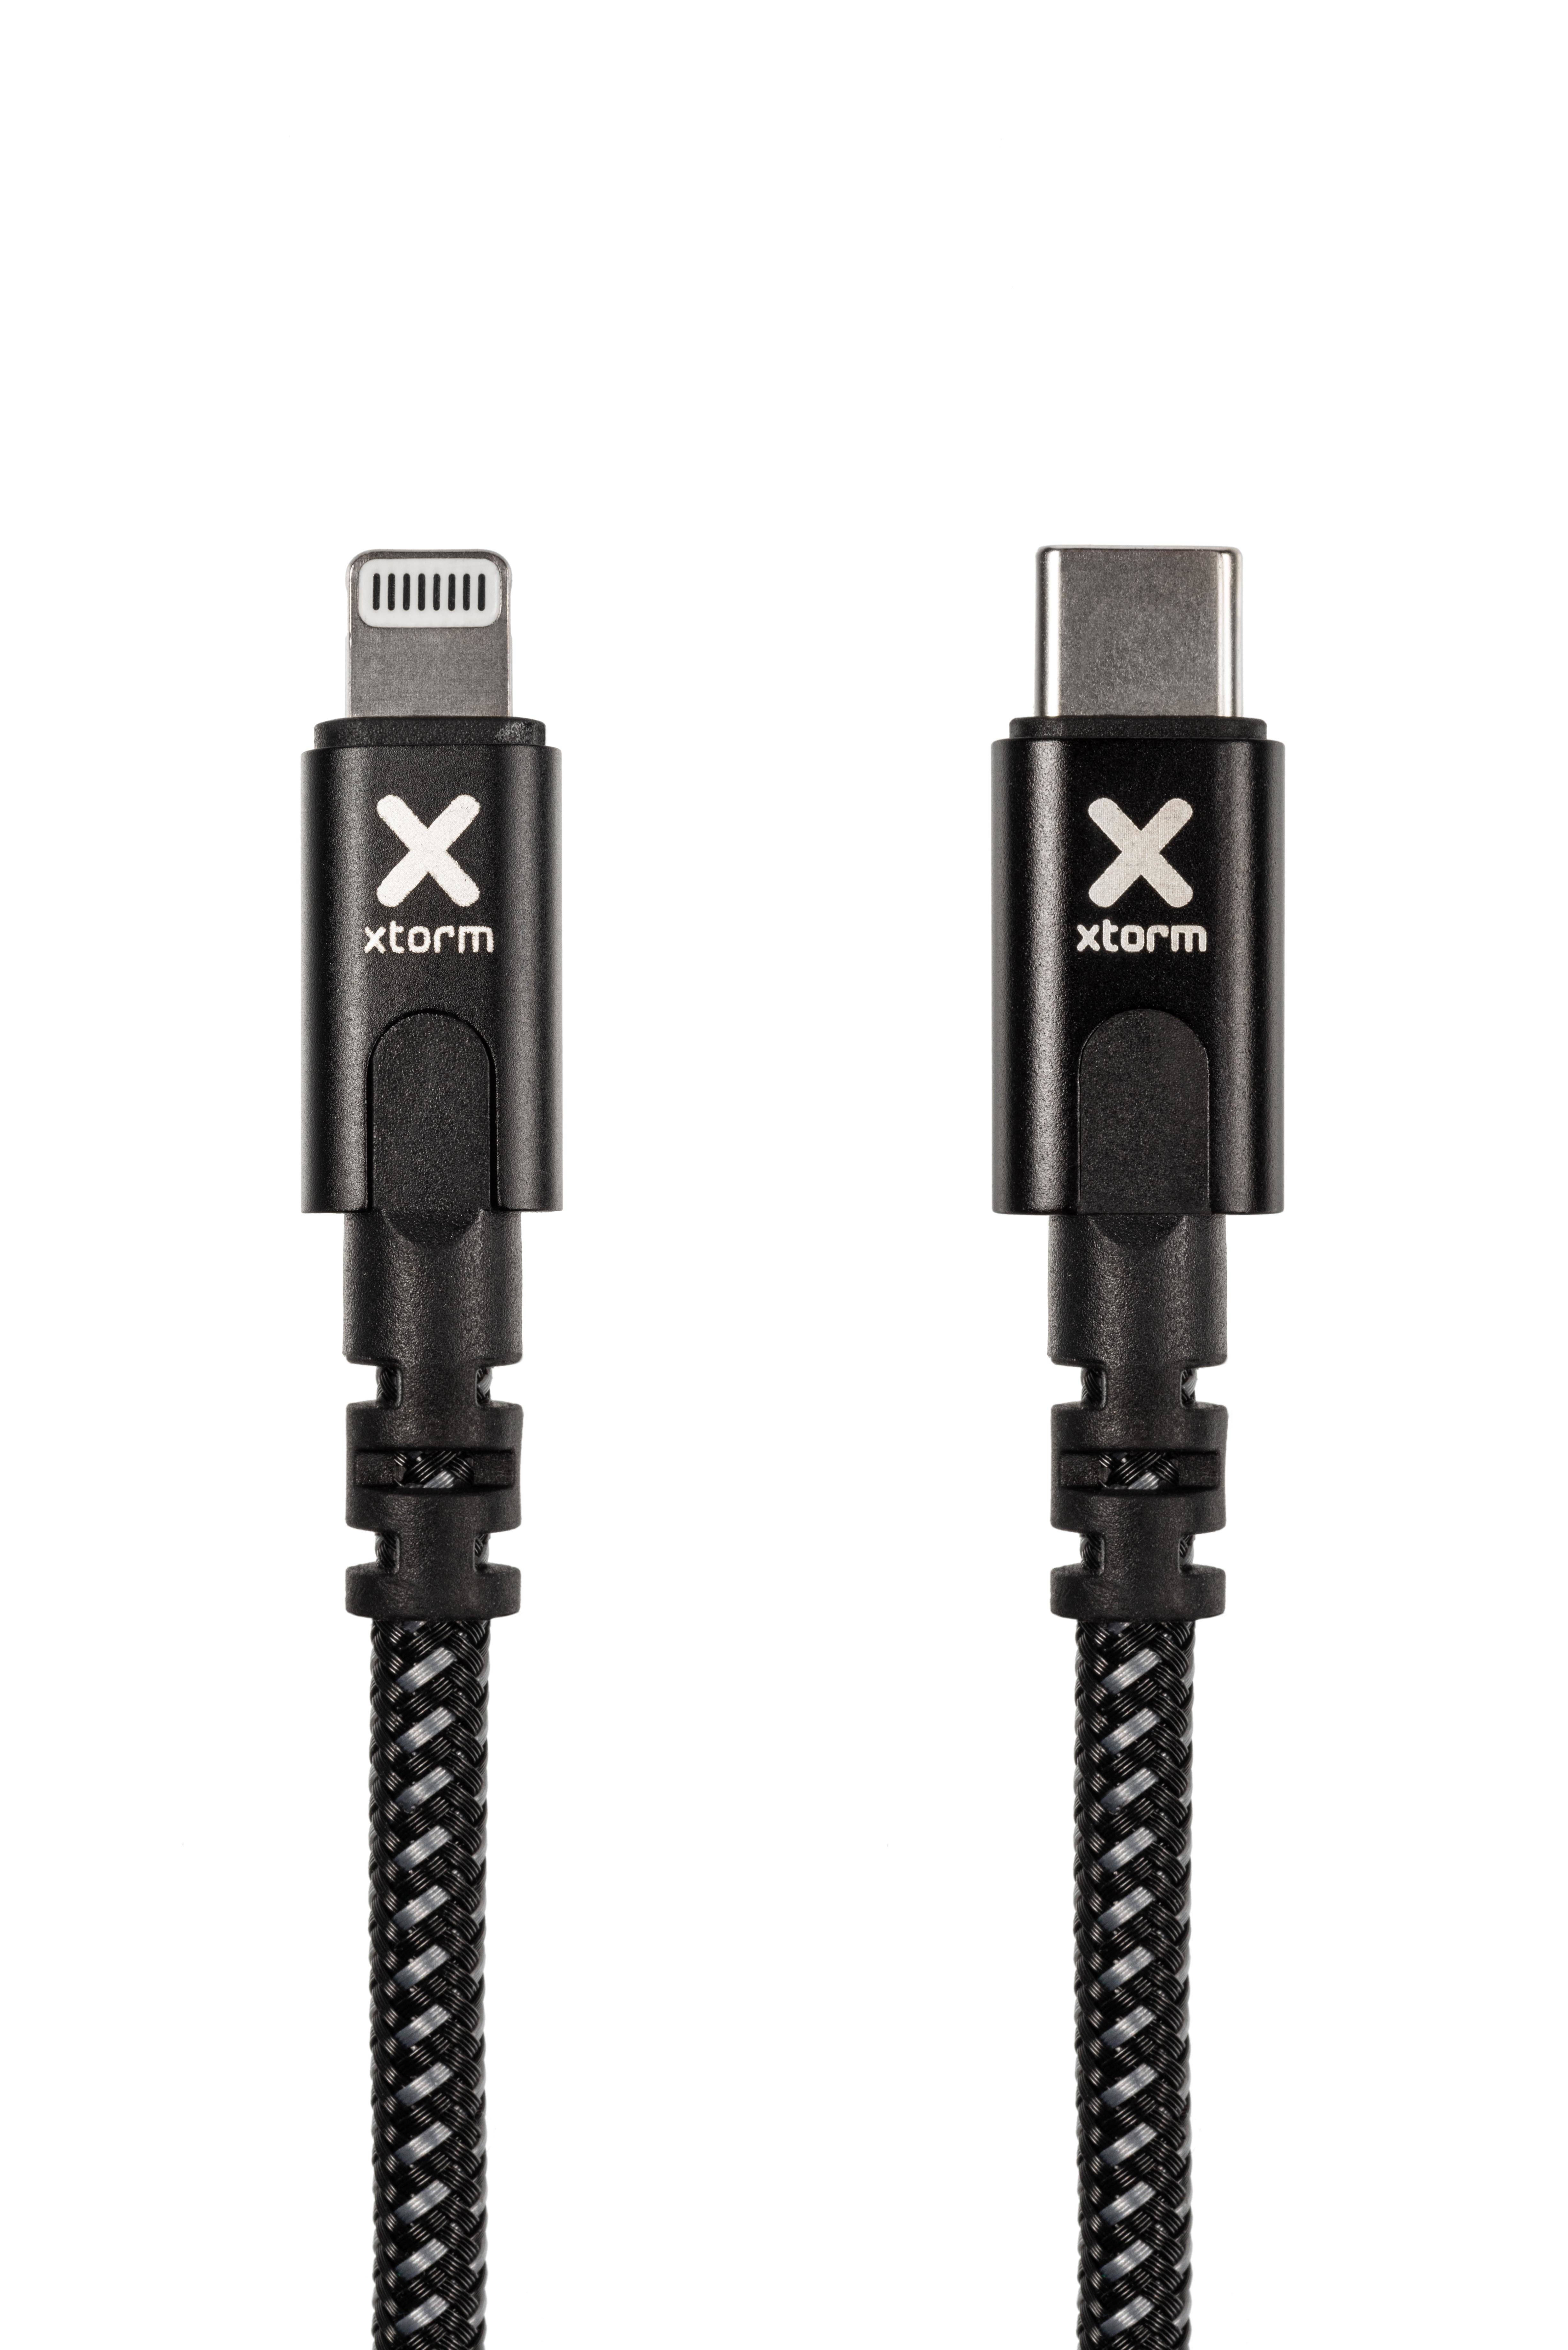 Rca Informatique - Image du produit : ORIGINAL USB-C TO LIGHTNING CABLE (3M) BLACK